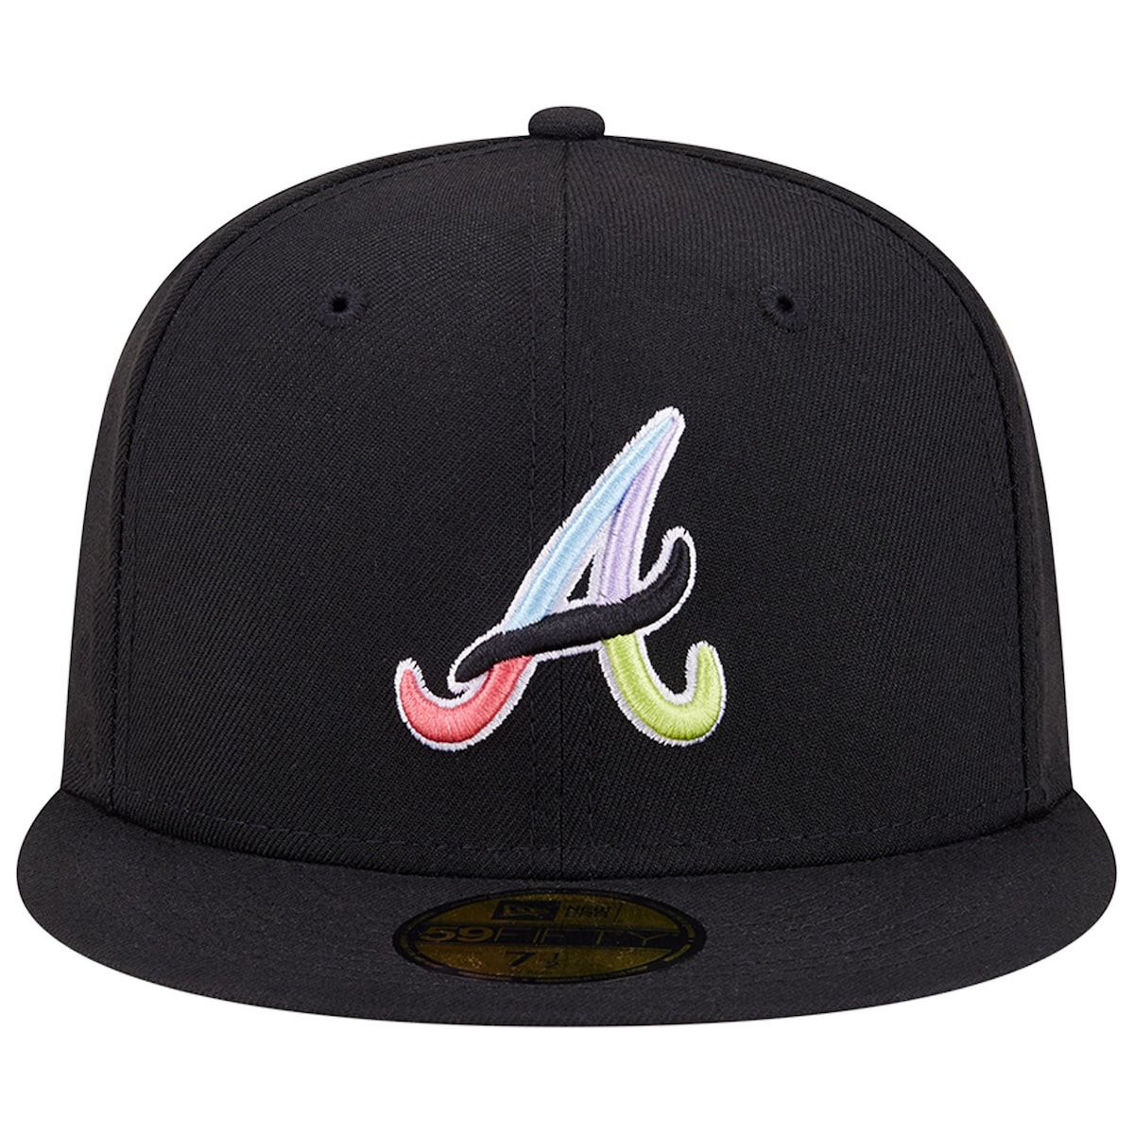 New Era Men's Black Atlanta Braves Multi-Color Pack 59FIFTY Fitted Hat - Image 3 of 4